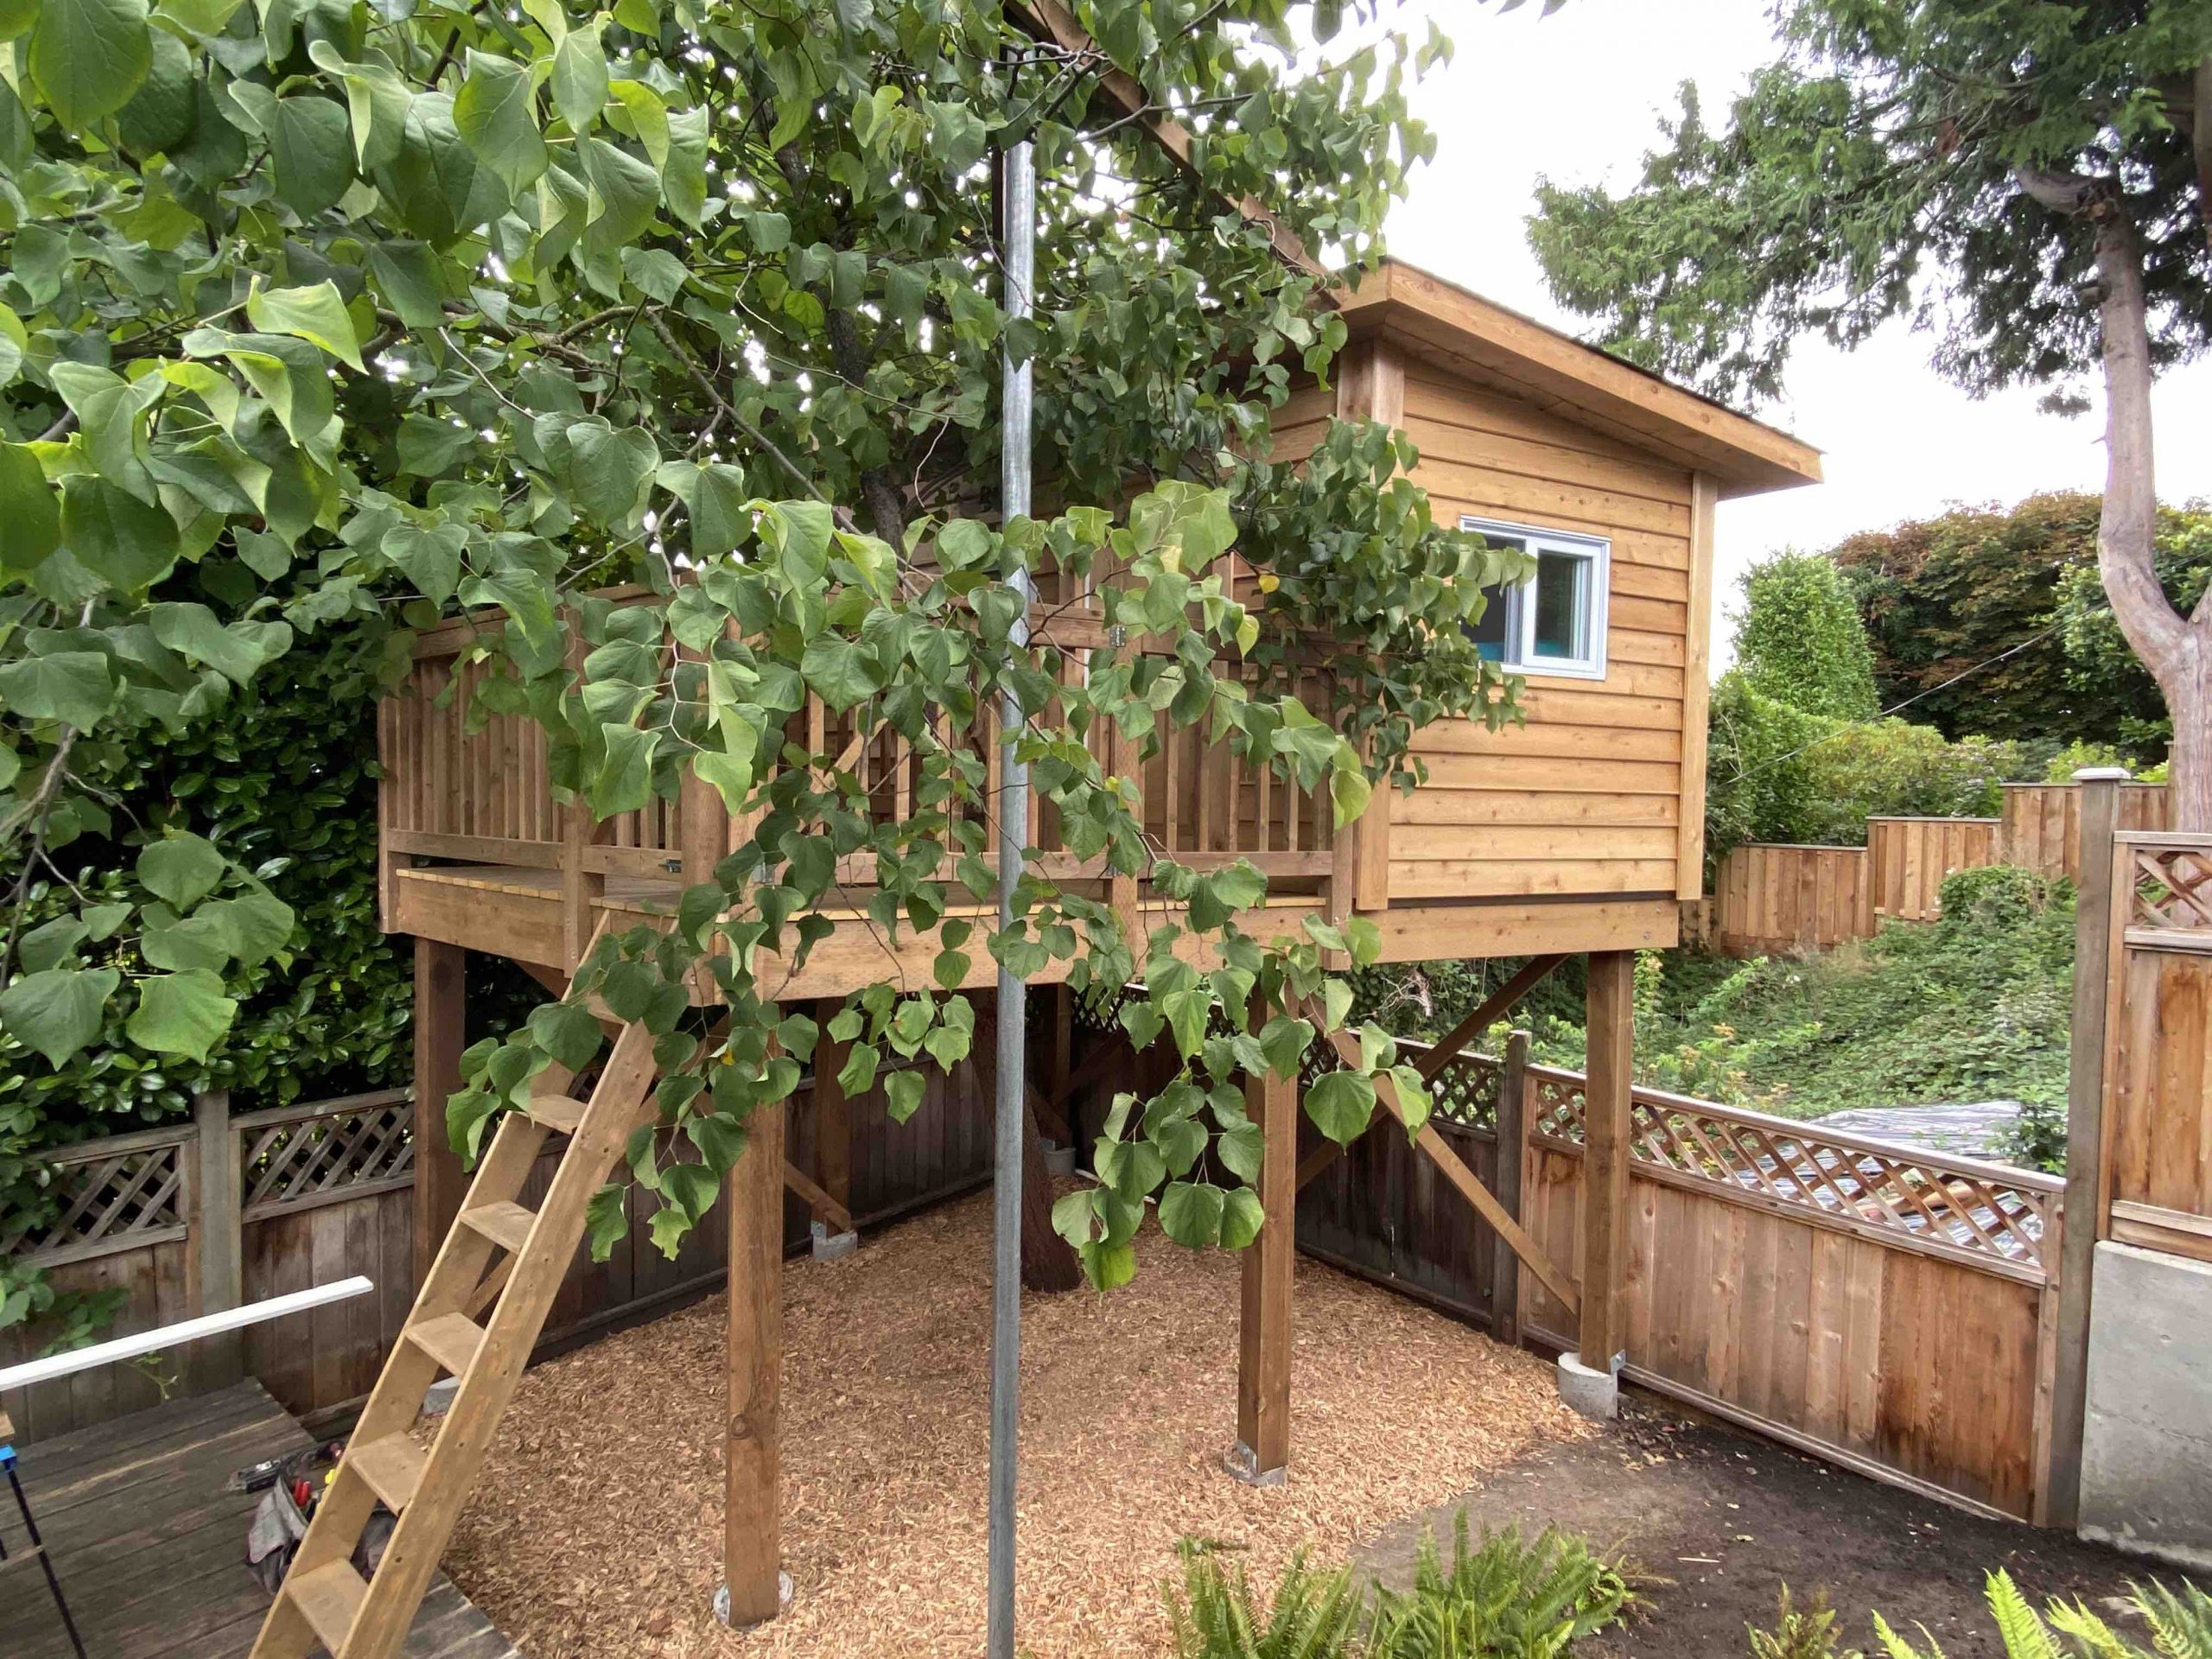 Magical Treehouse on a Raised Deck